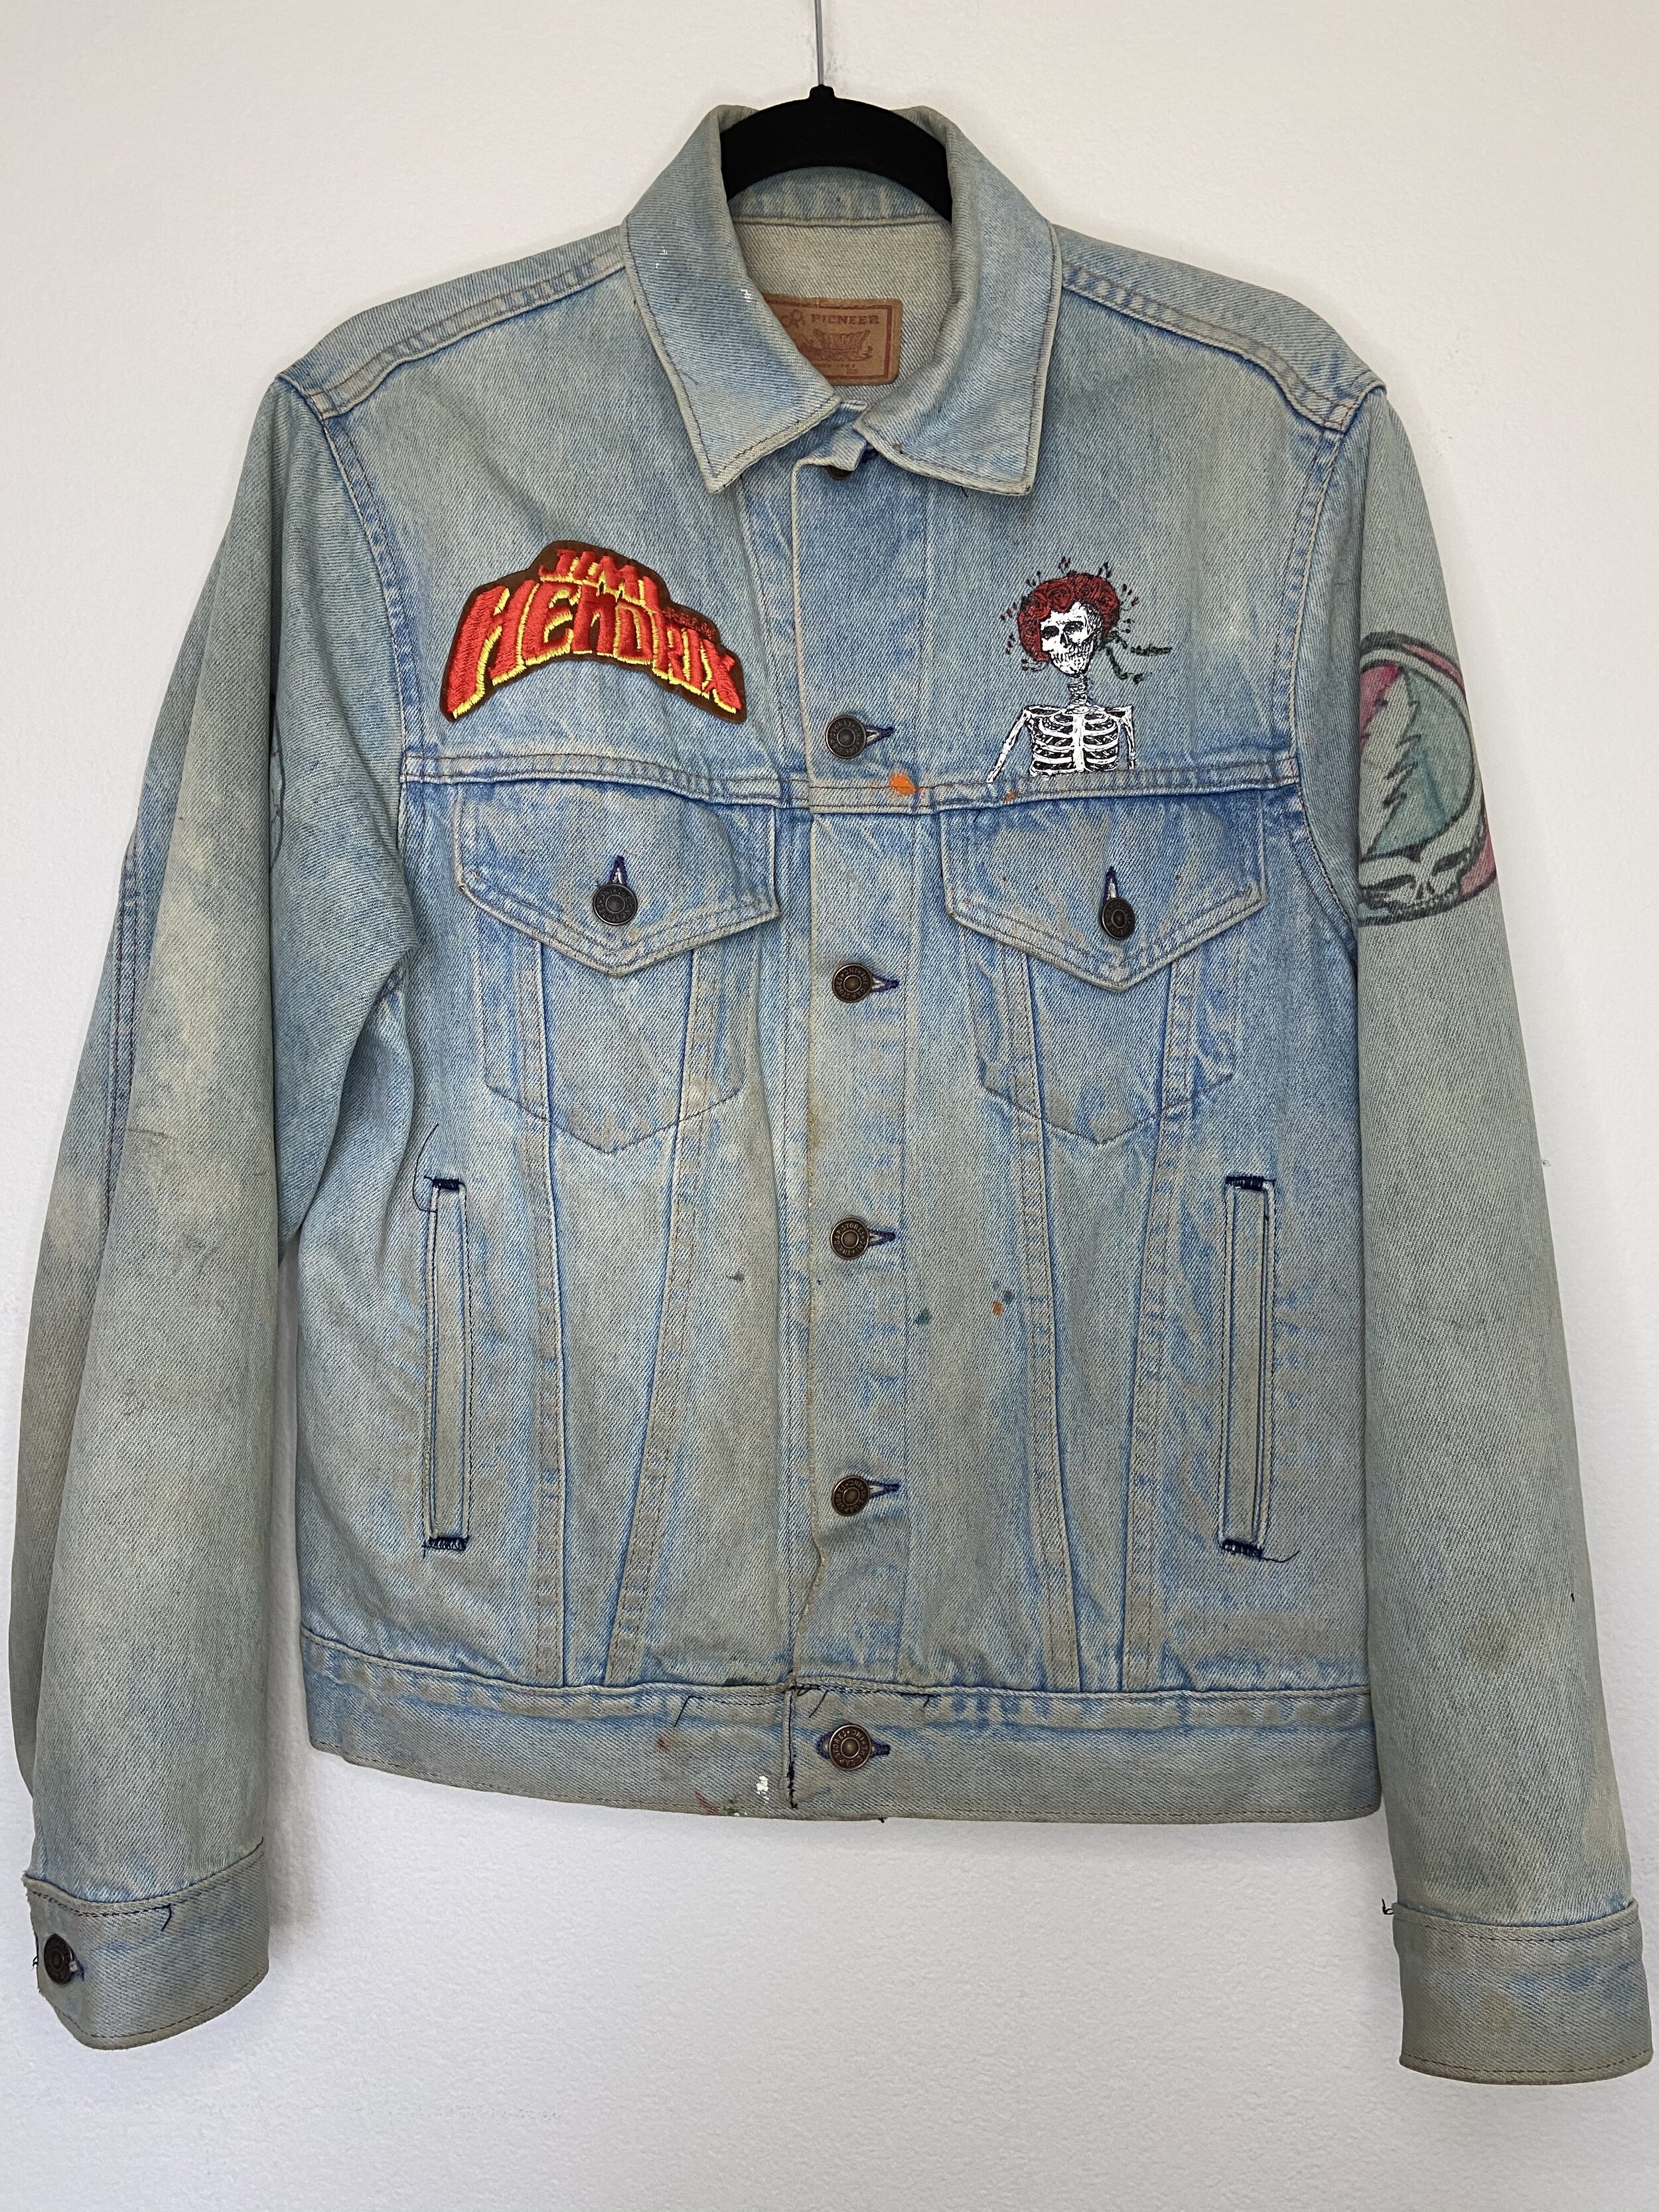 ART] The first jacket I ever made using a vintage Gap denim jacket